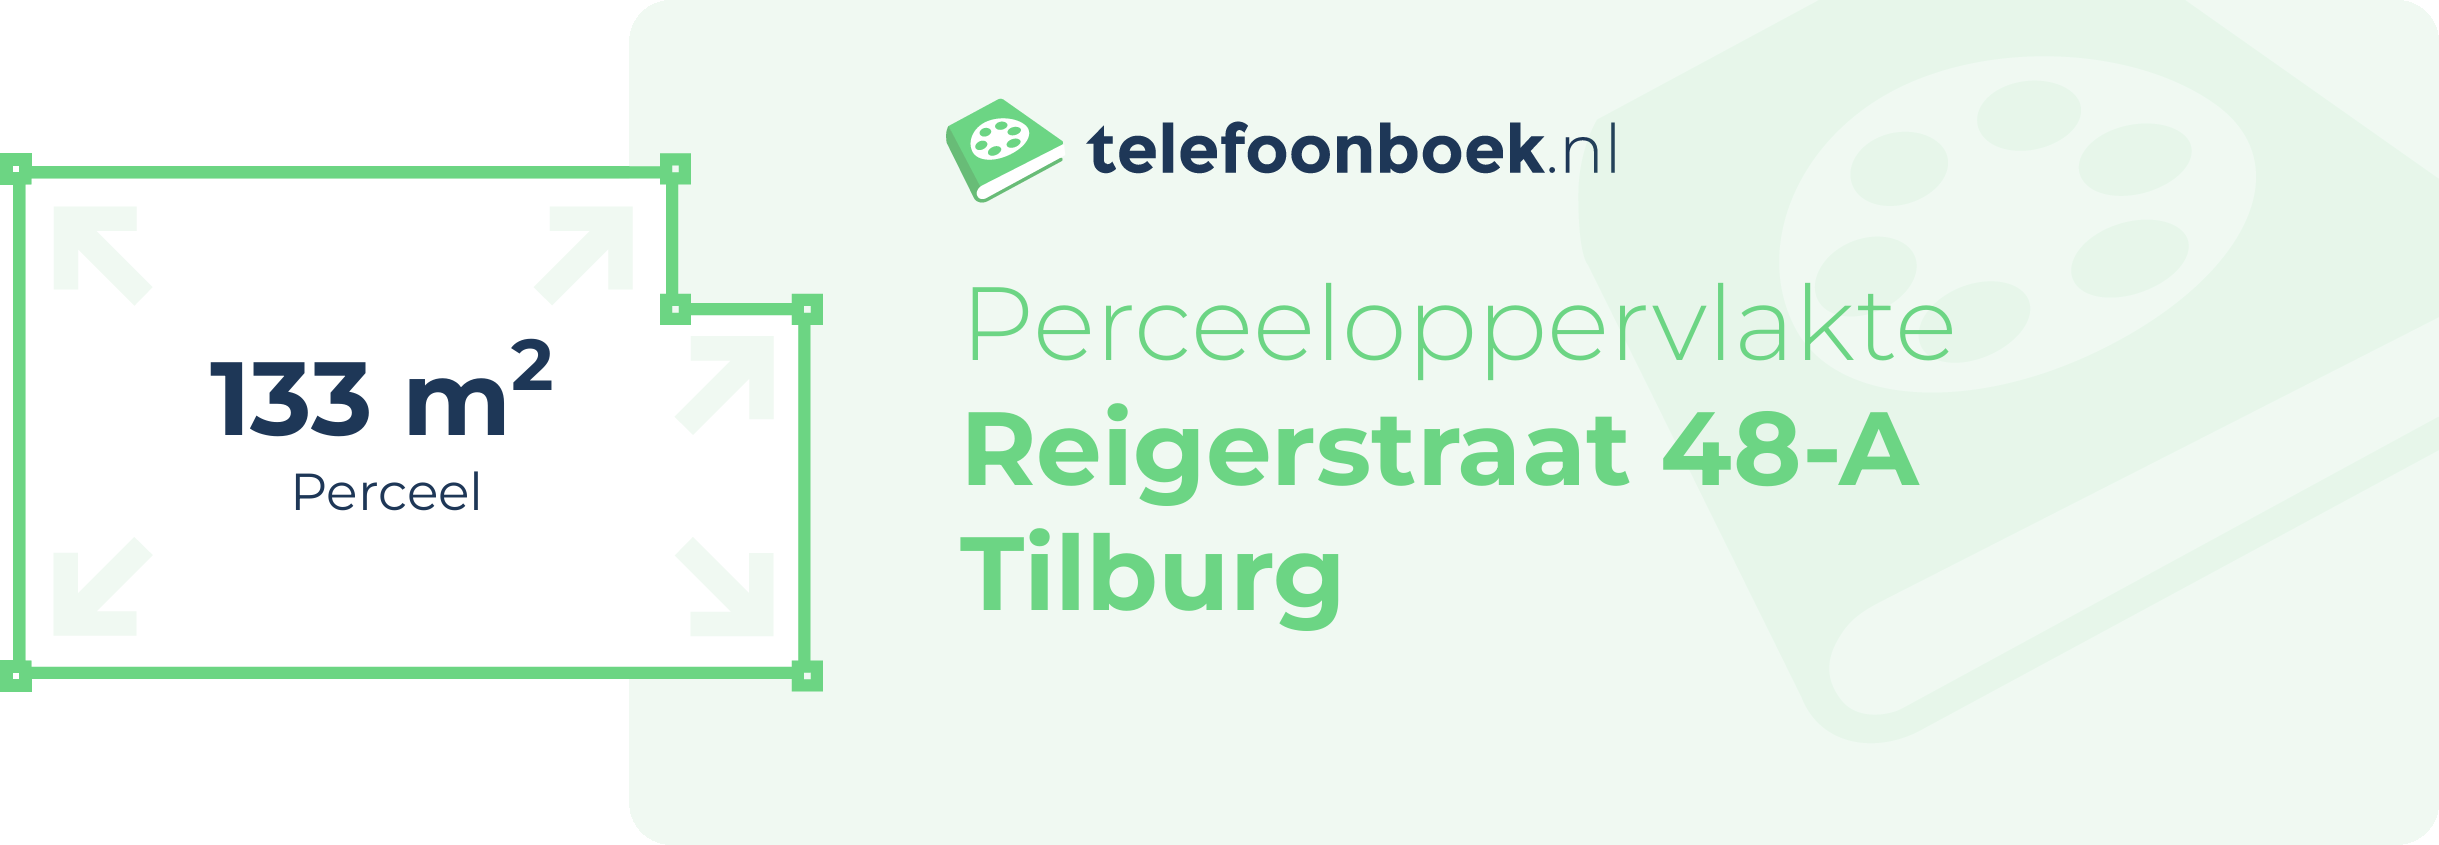 Perceeloppervlakte Reigerstraat 48-A Tilburg